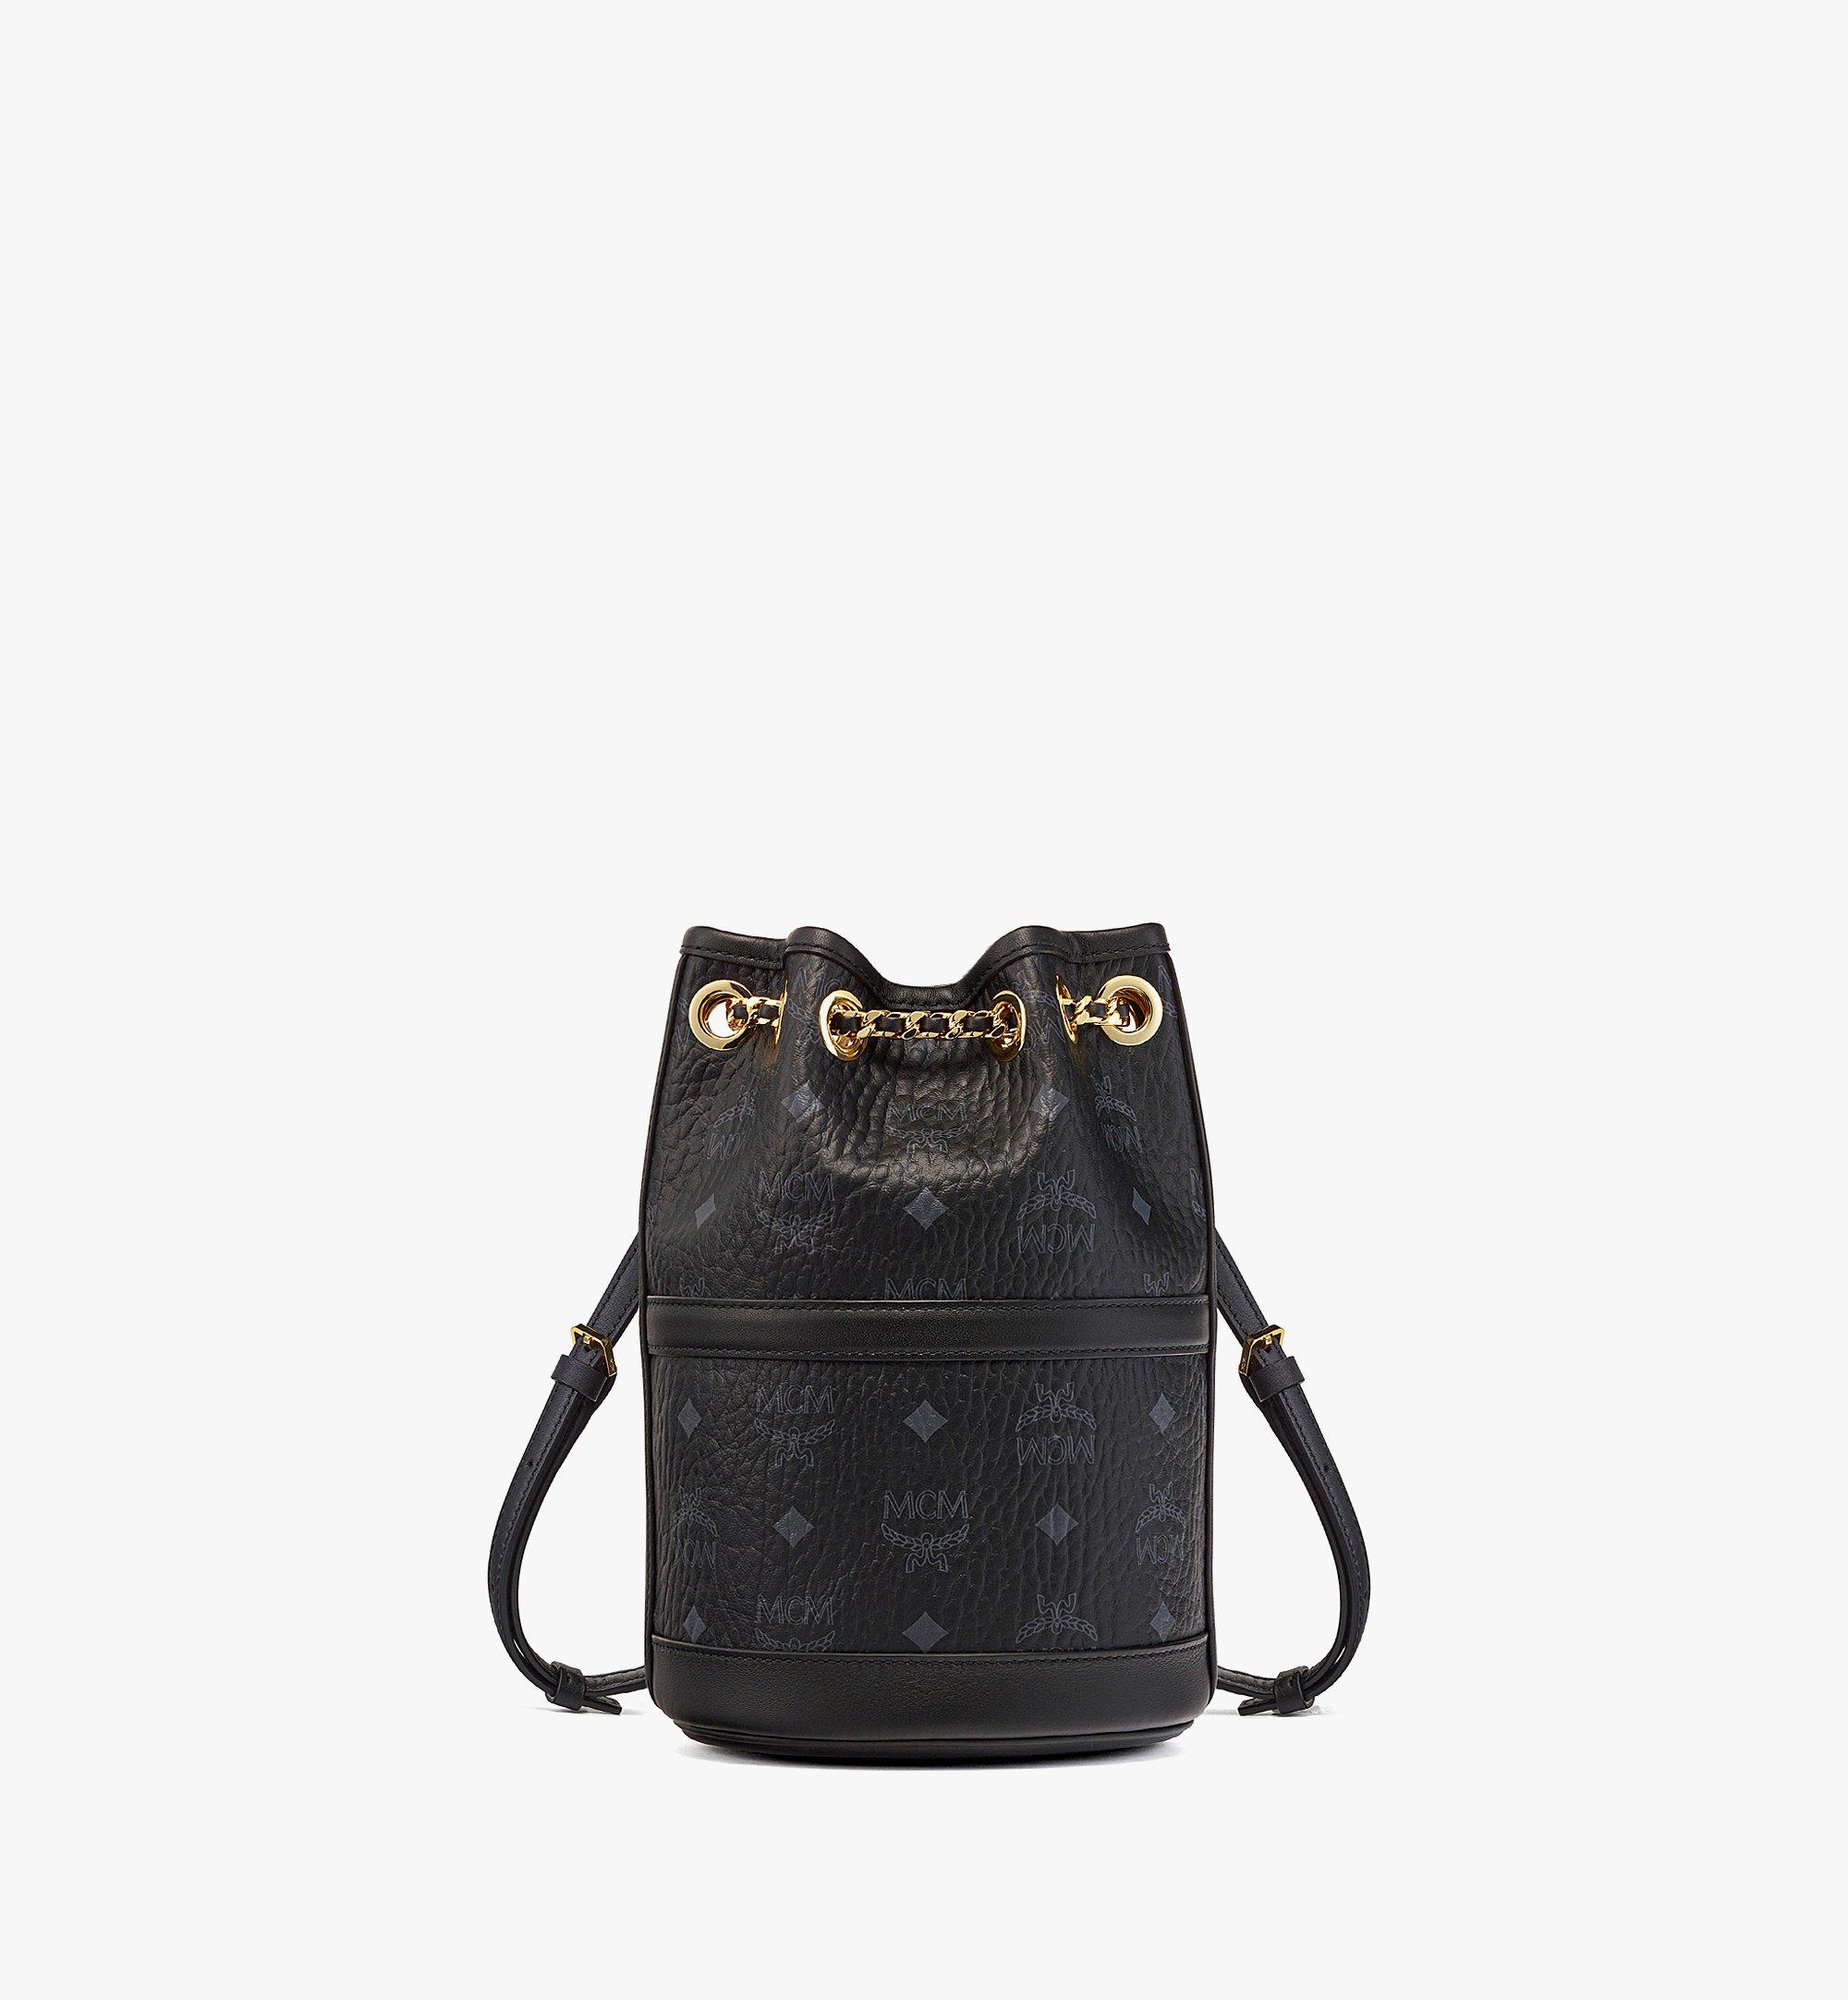 Mcm Outlet: mini bag for woman - Blue  Mcm mini bag MWDDSDU08 online at